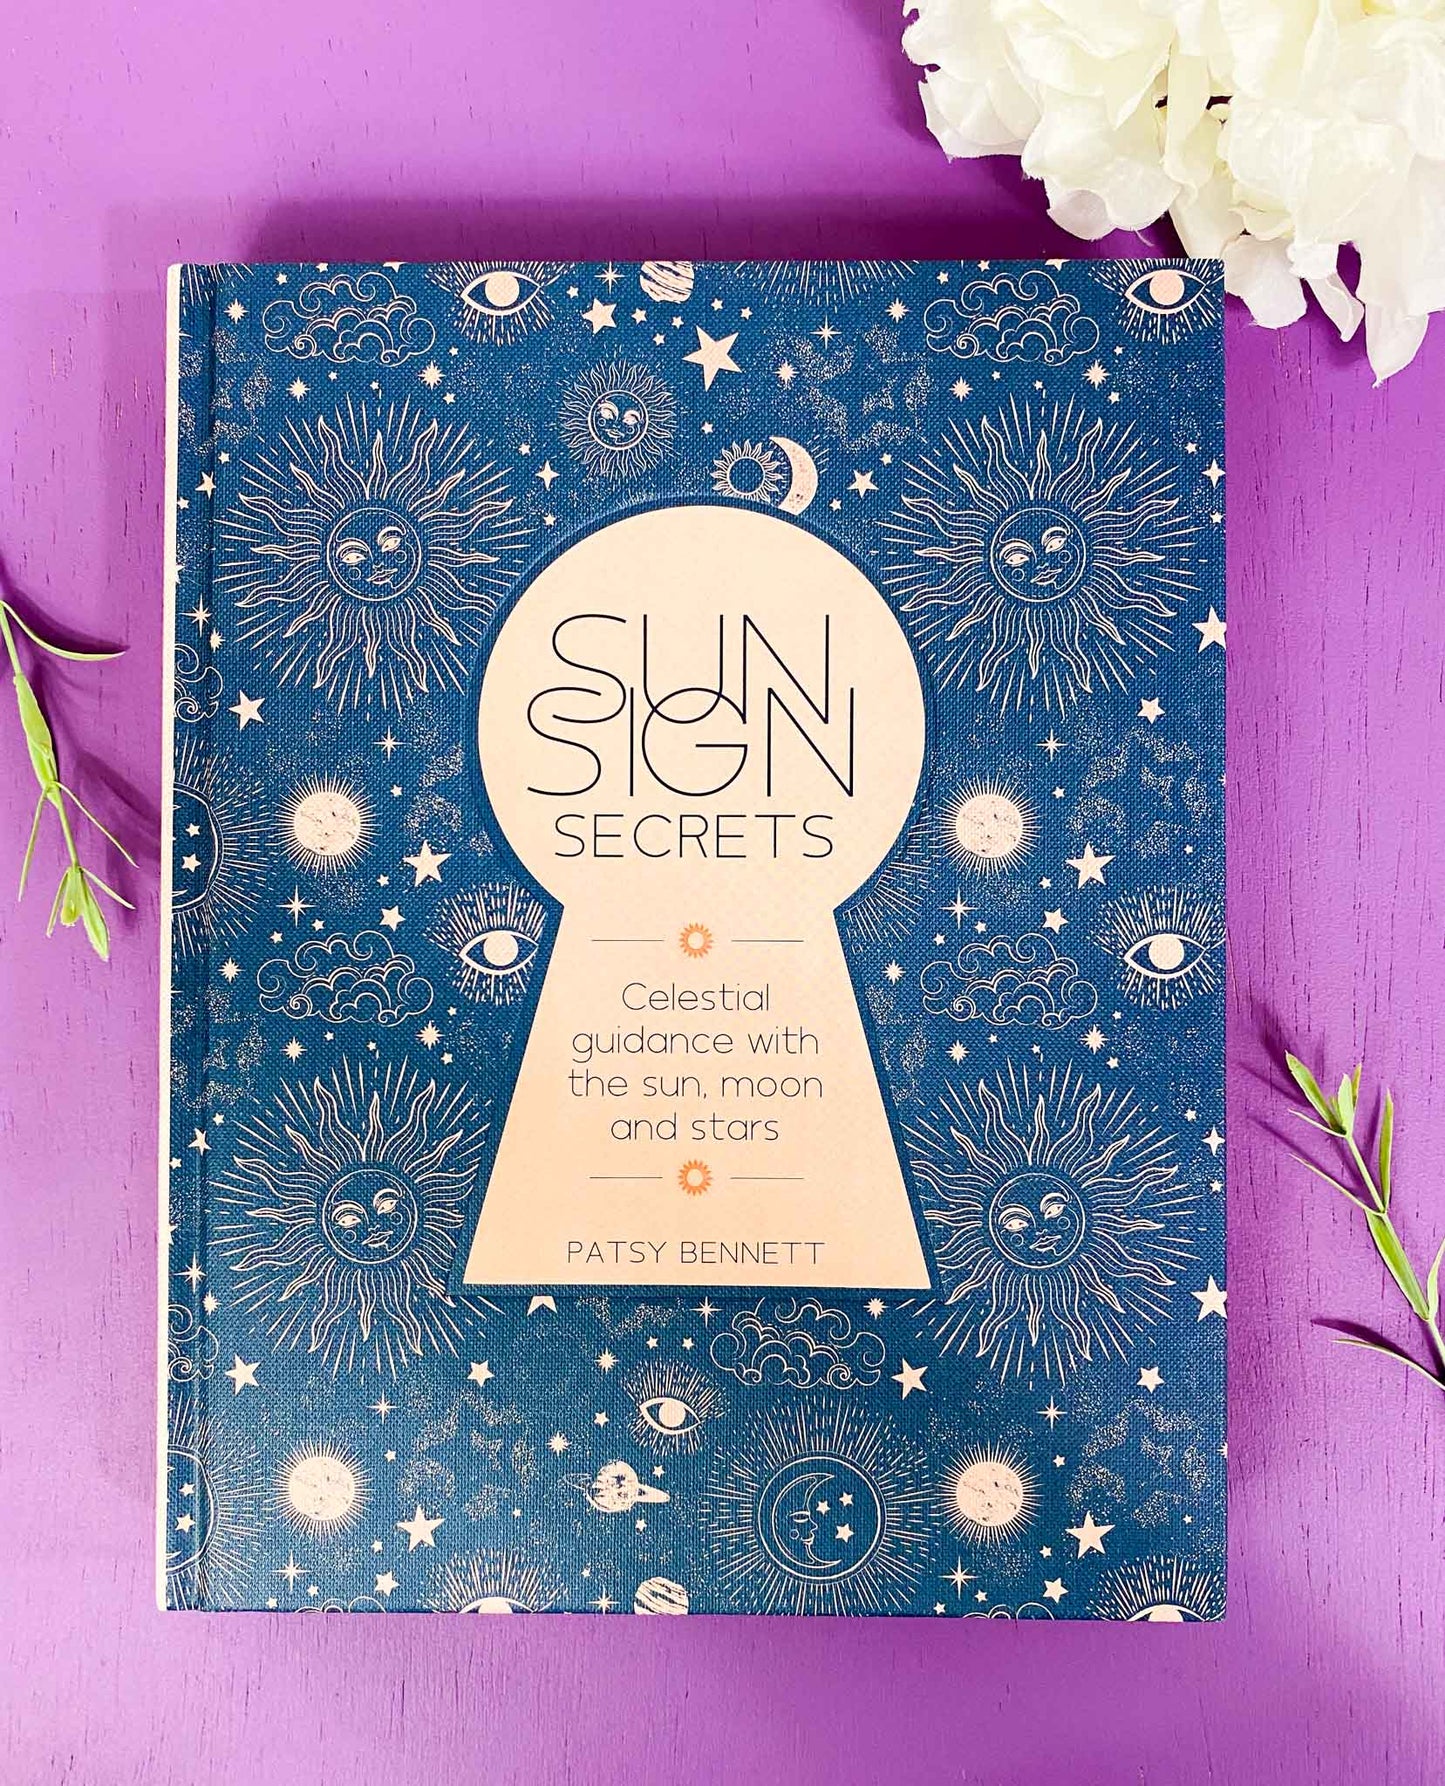 Sun Sign Secrets: Celestial Guidance with the Sun, Moon and Stars